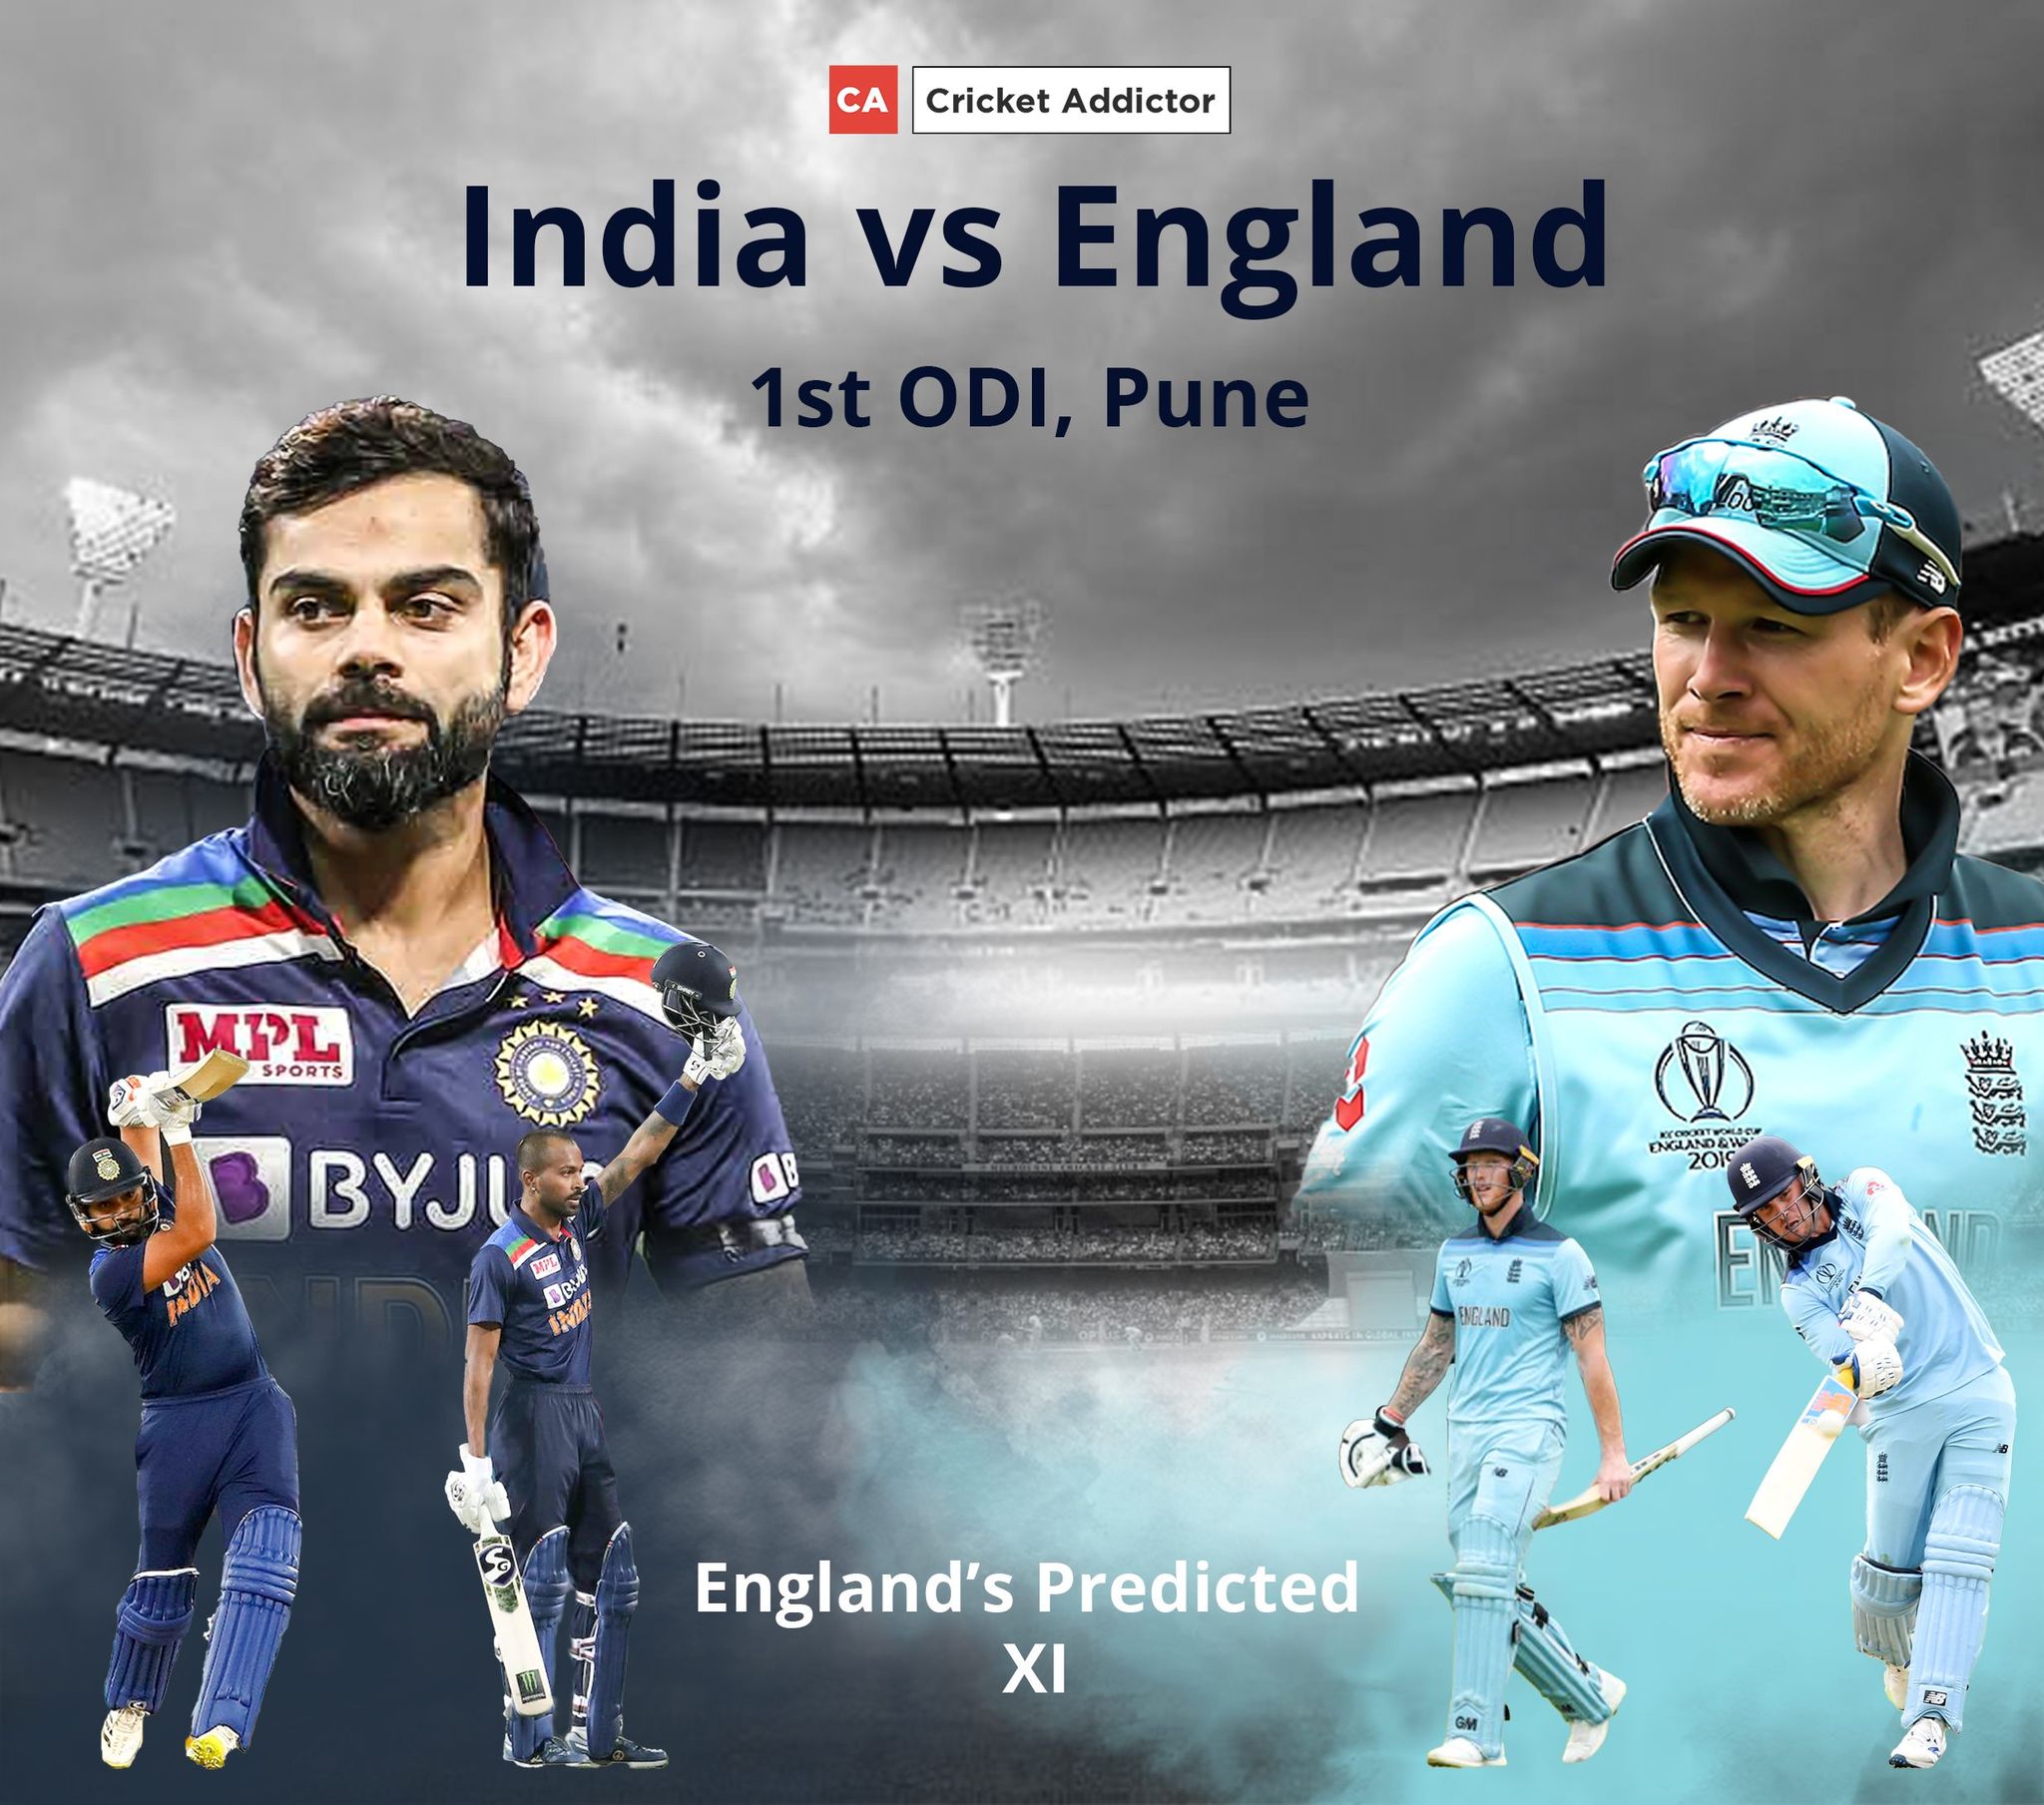 India vs England 2021, 1st ODI: England’s Predicted XI